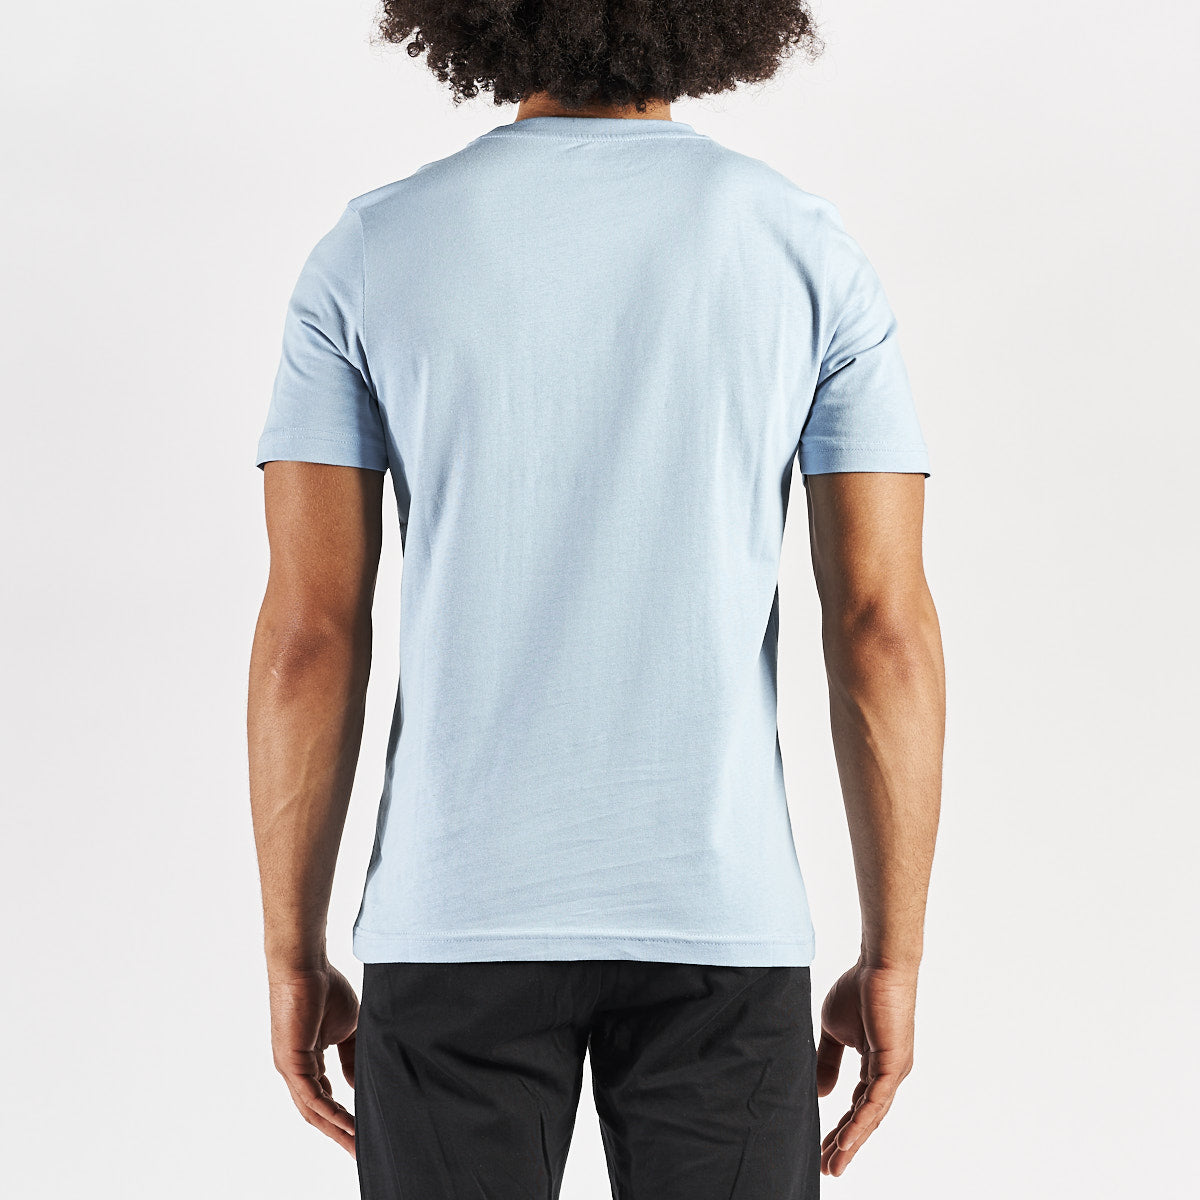 T-shirt Cafers Bleu Homme - Image 3